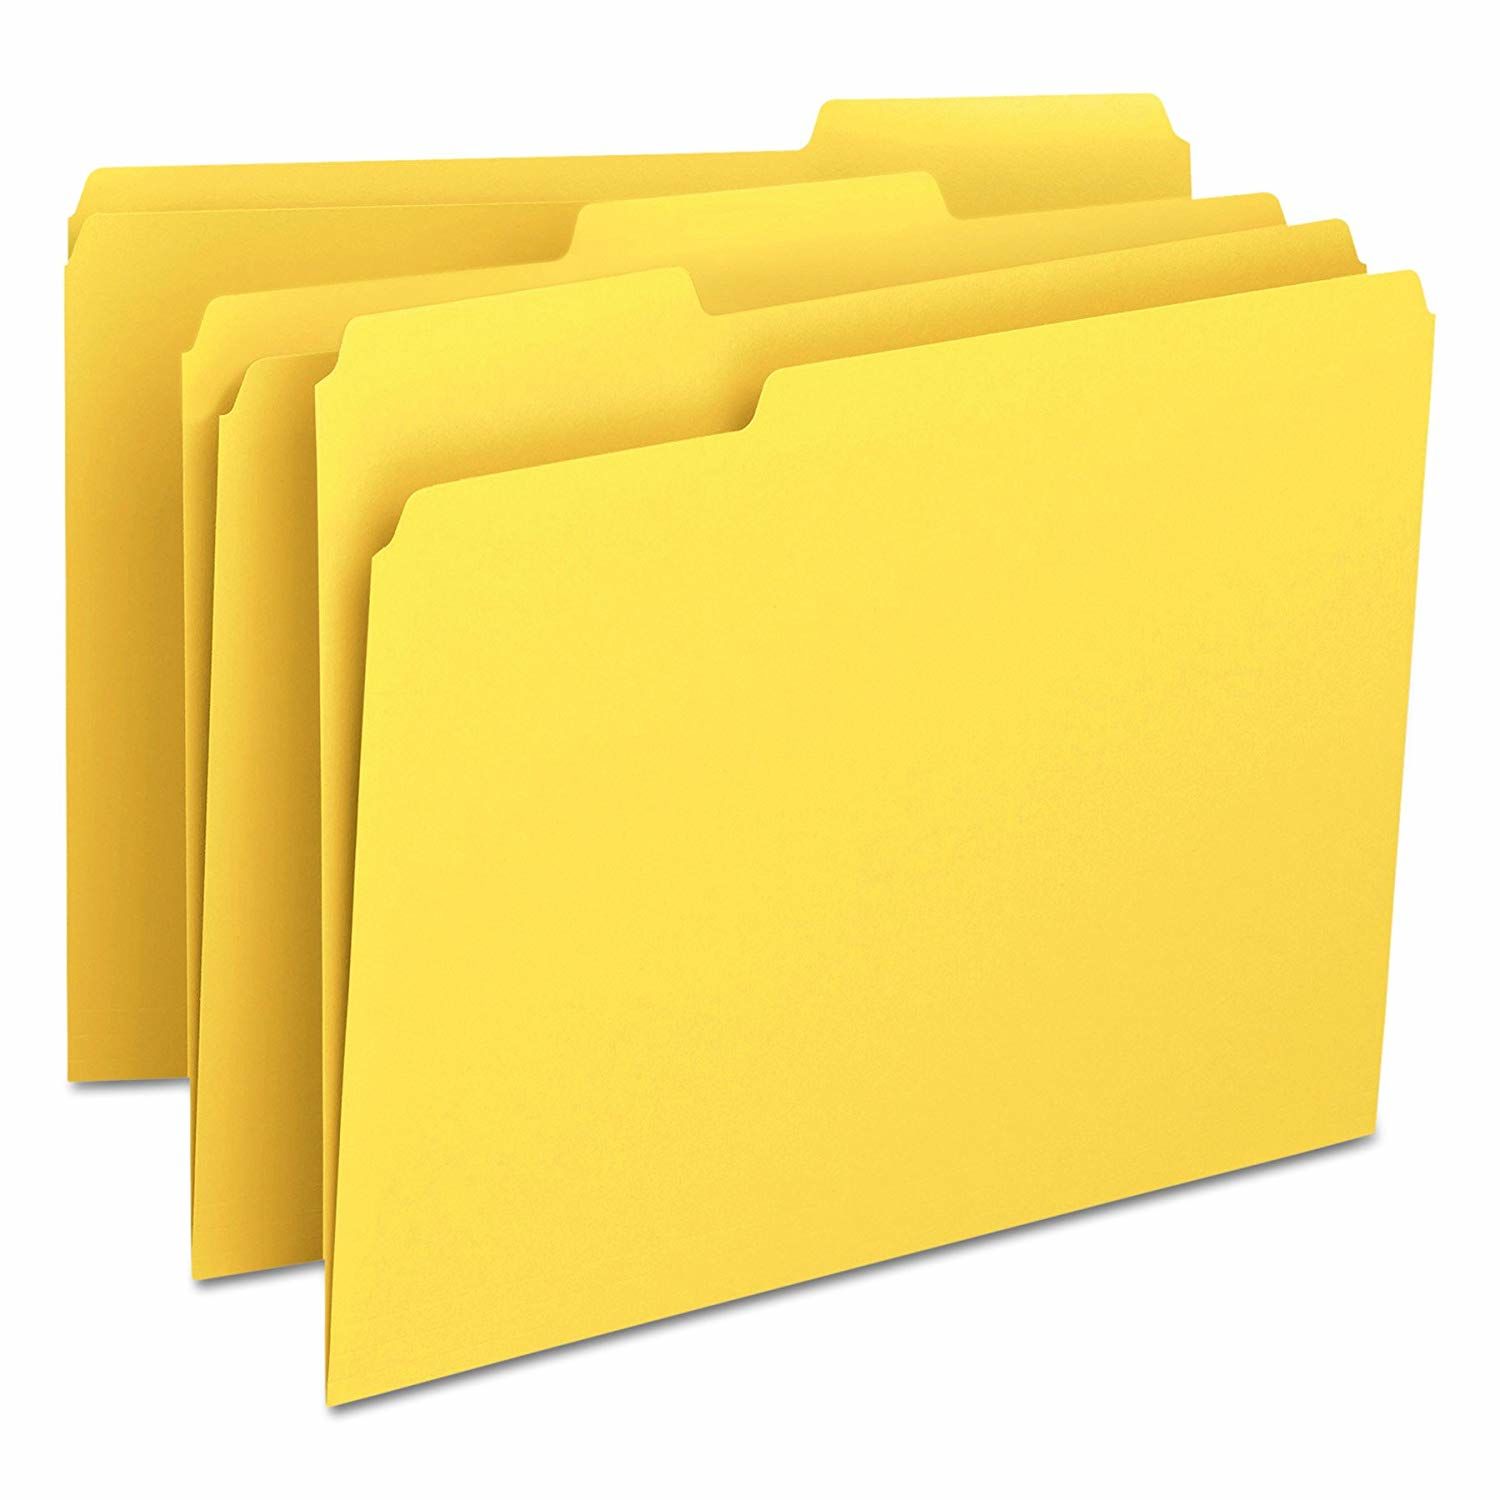 Manila (American) folder A4 yellow